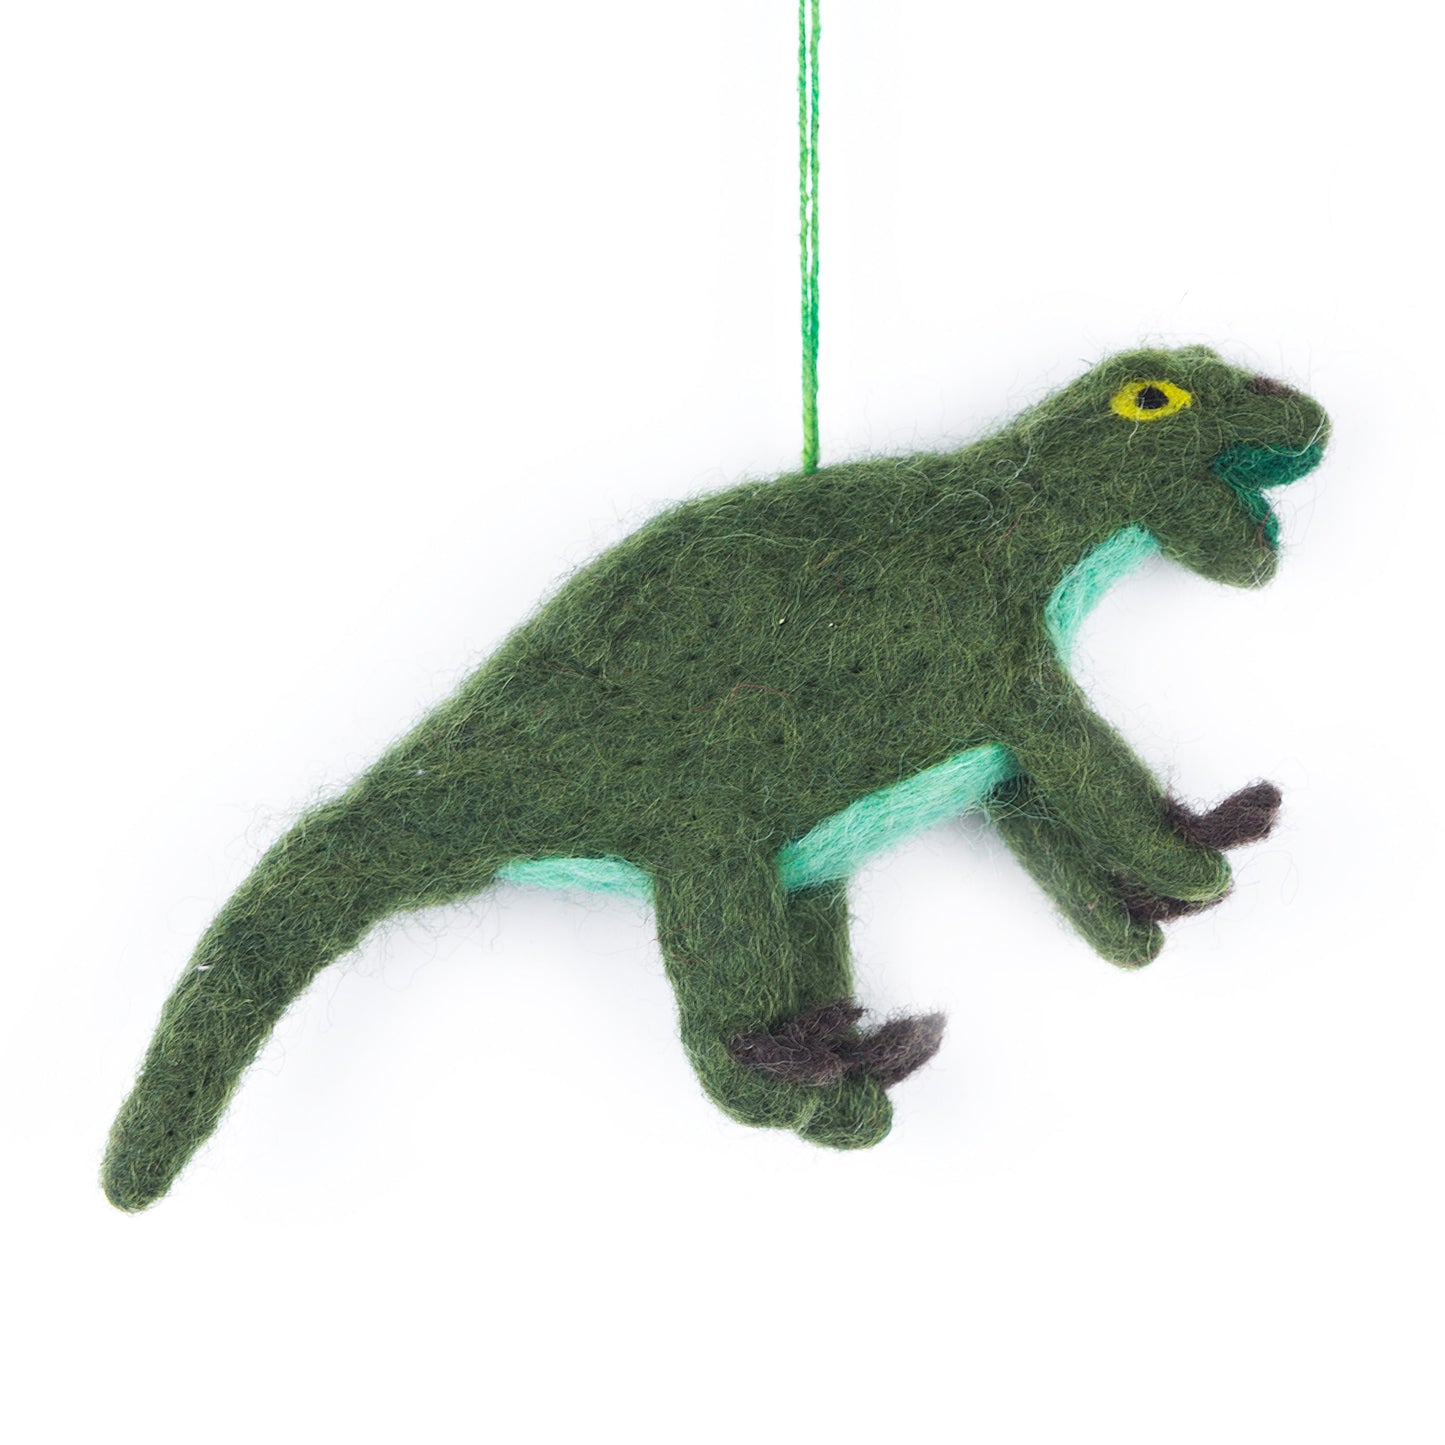 Small Hand-Felted Dinosaur Decoration | Fair Trade and handmade - velociraptor